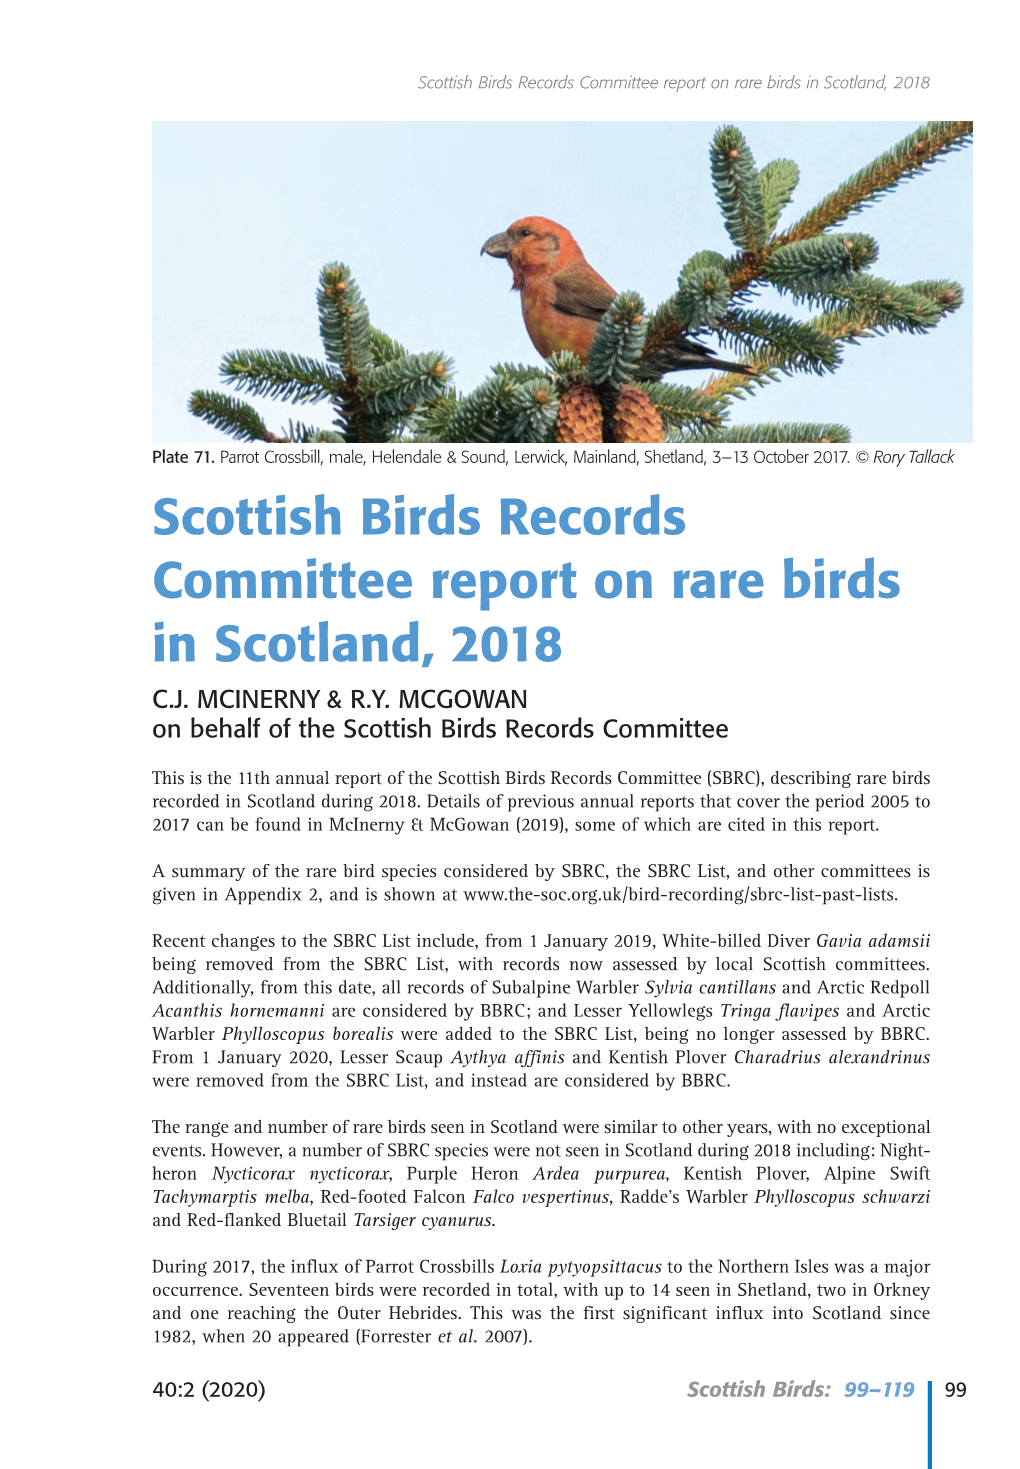 Scottish Birds Records Committee Report on Rare Birds in Scotland, 2018